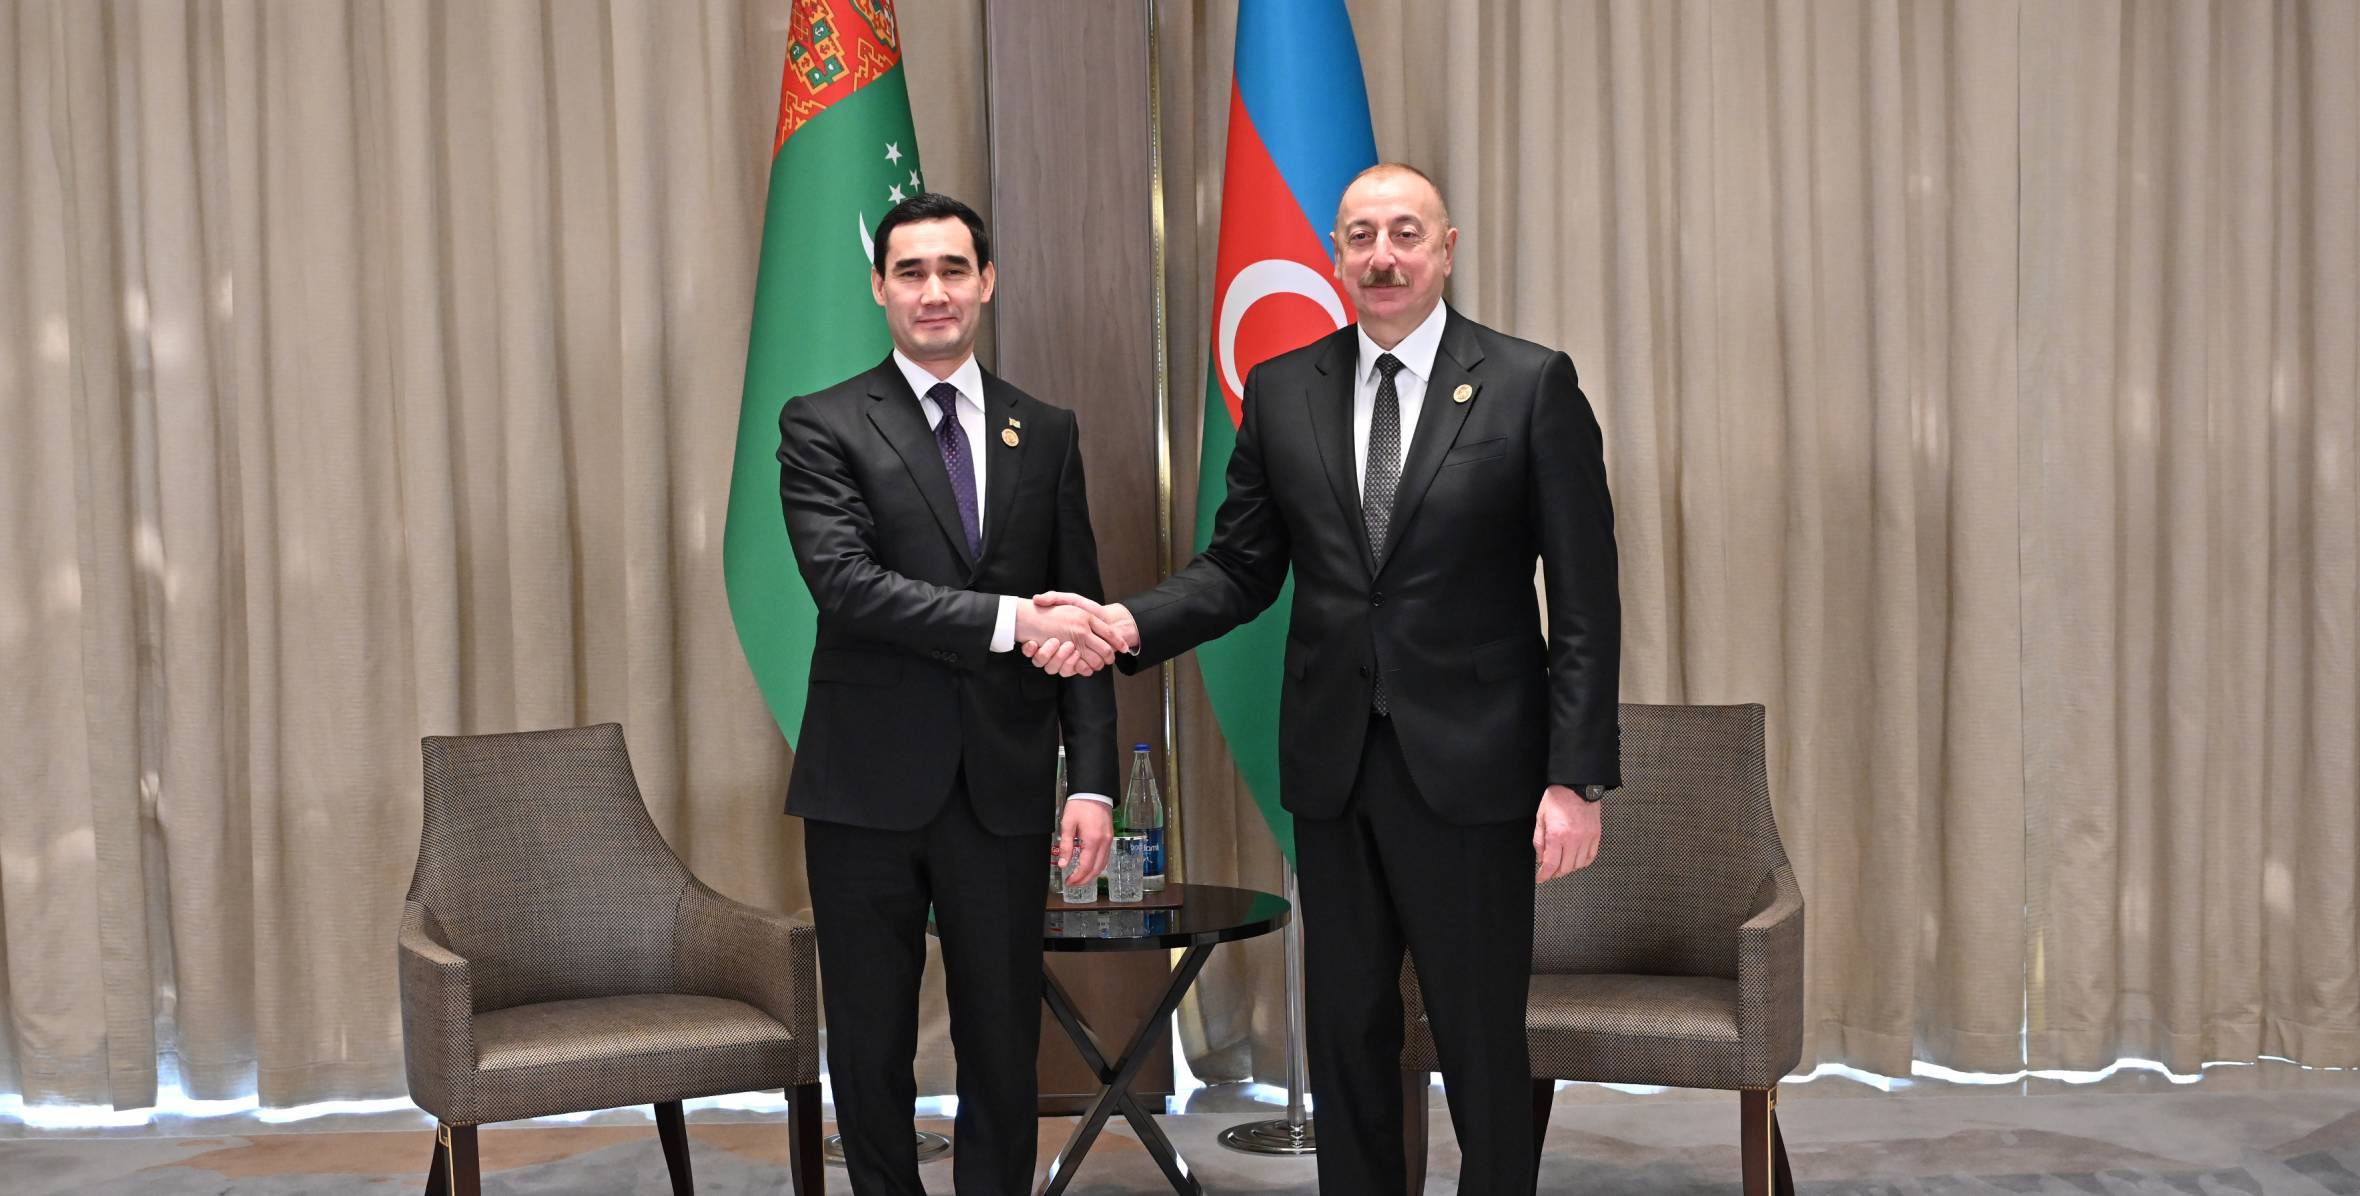 Ilham Aliyev met with President of Turkmenistan Serdar Berdimuhamedov